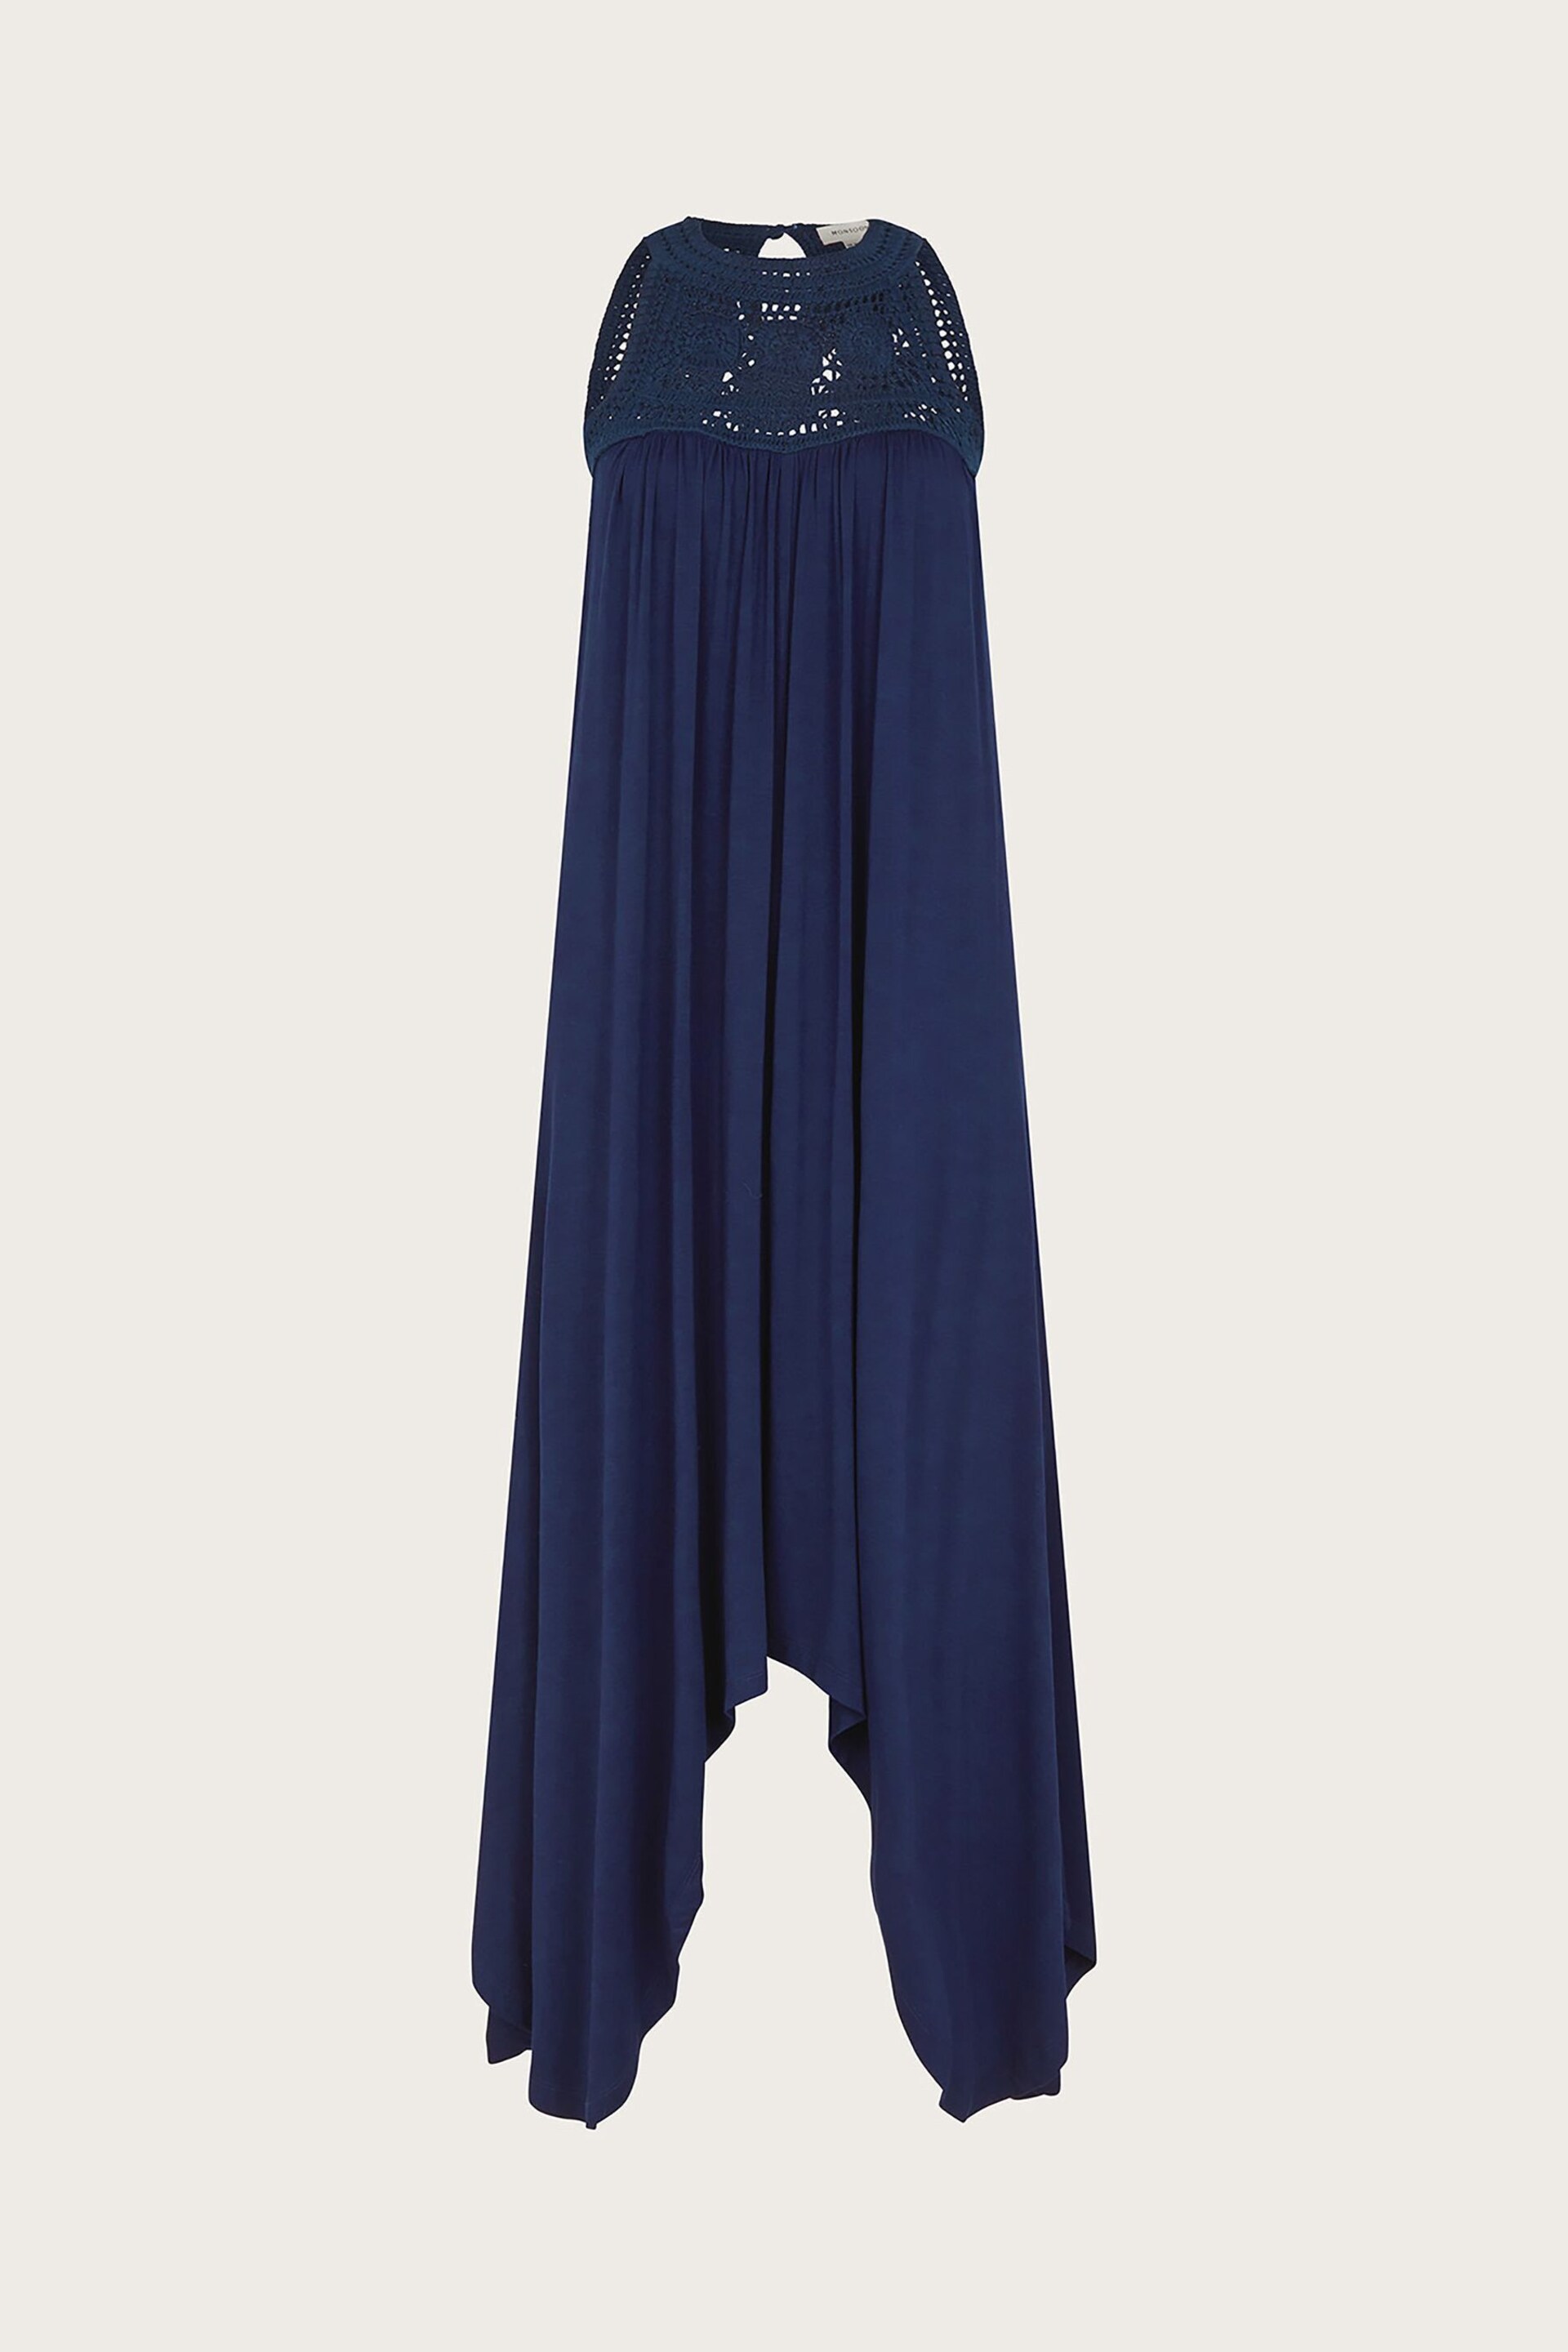 Monsoon Blue Darcy Crochet Dress - Image 5 of 5